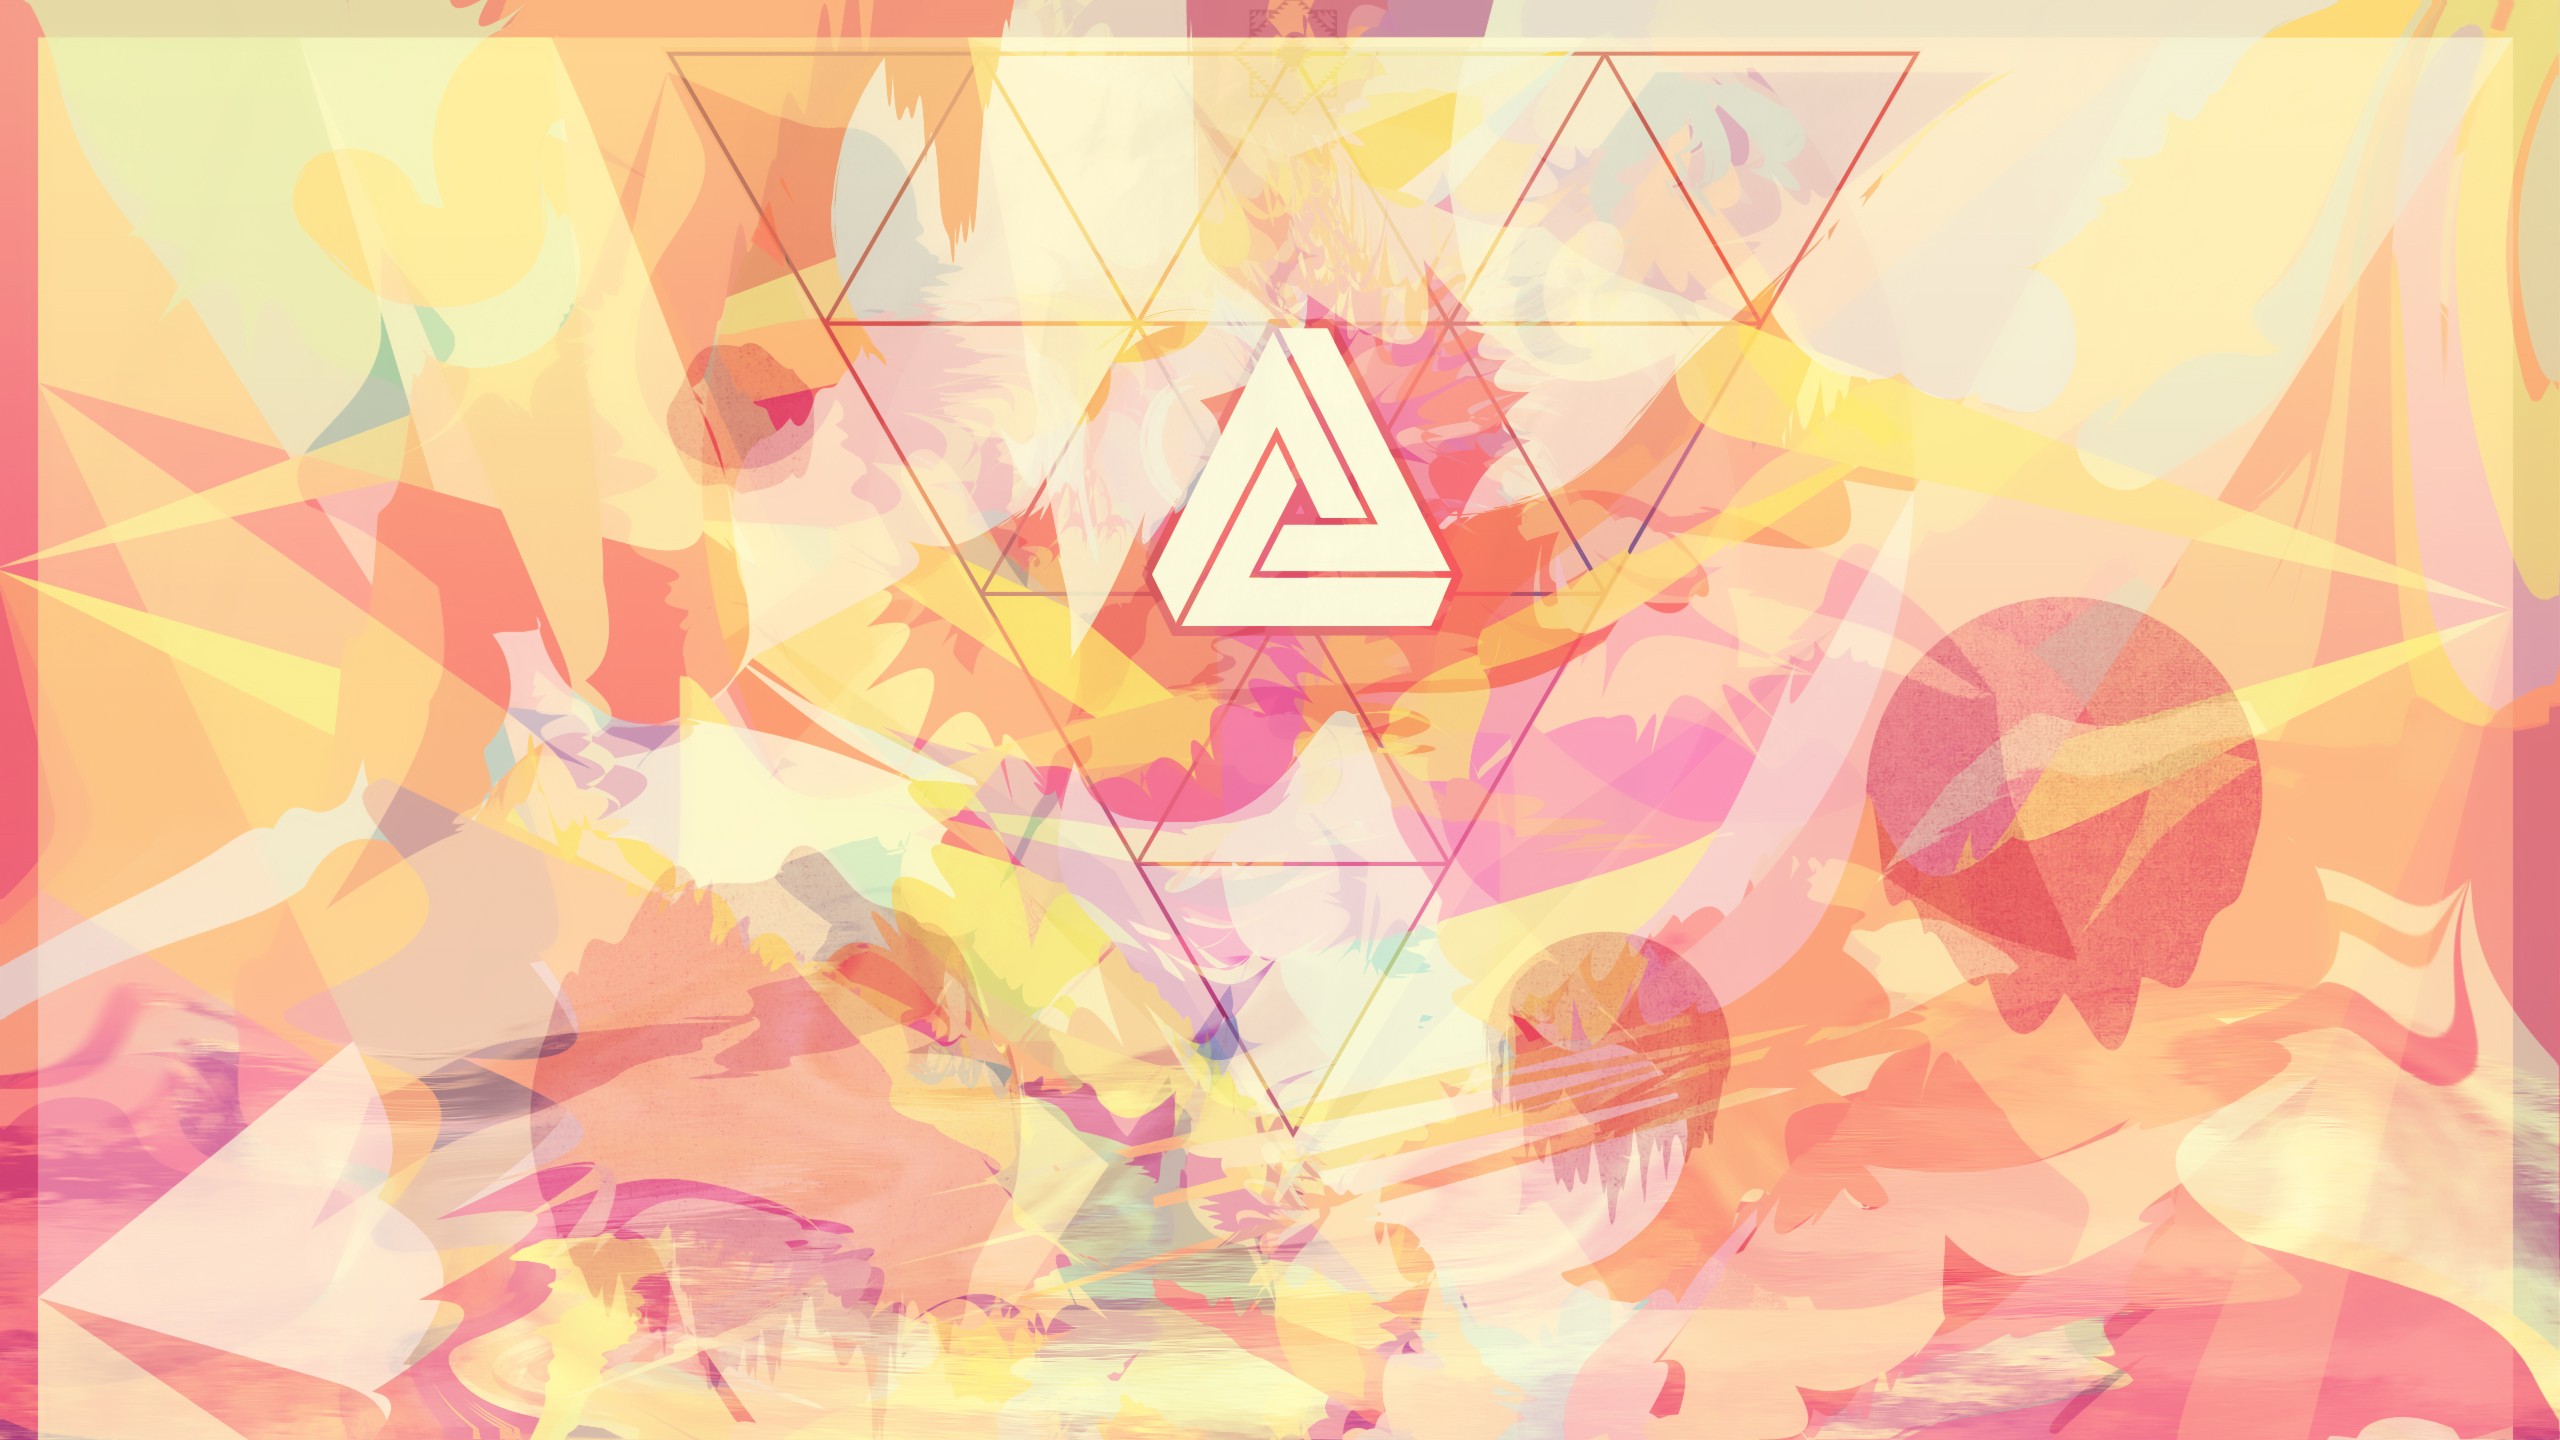 General 2560x1440 abstract iATKOS Penrose triangle triangle artwork colorful